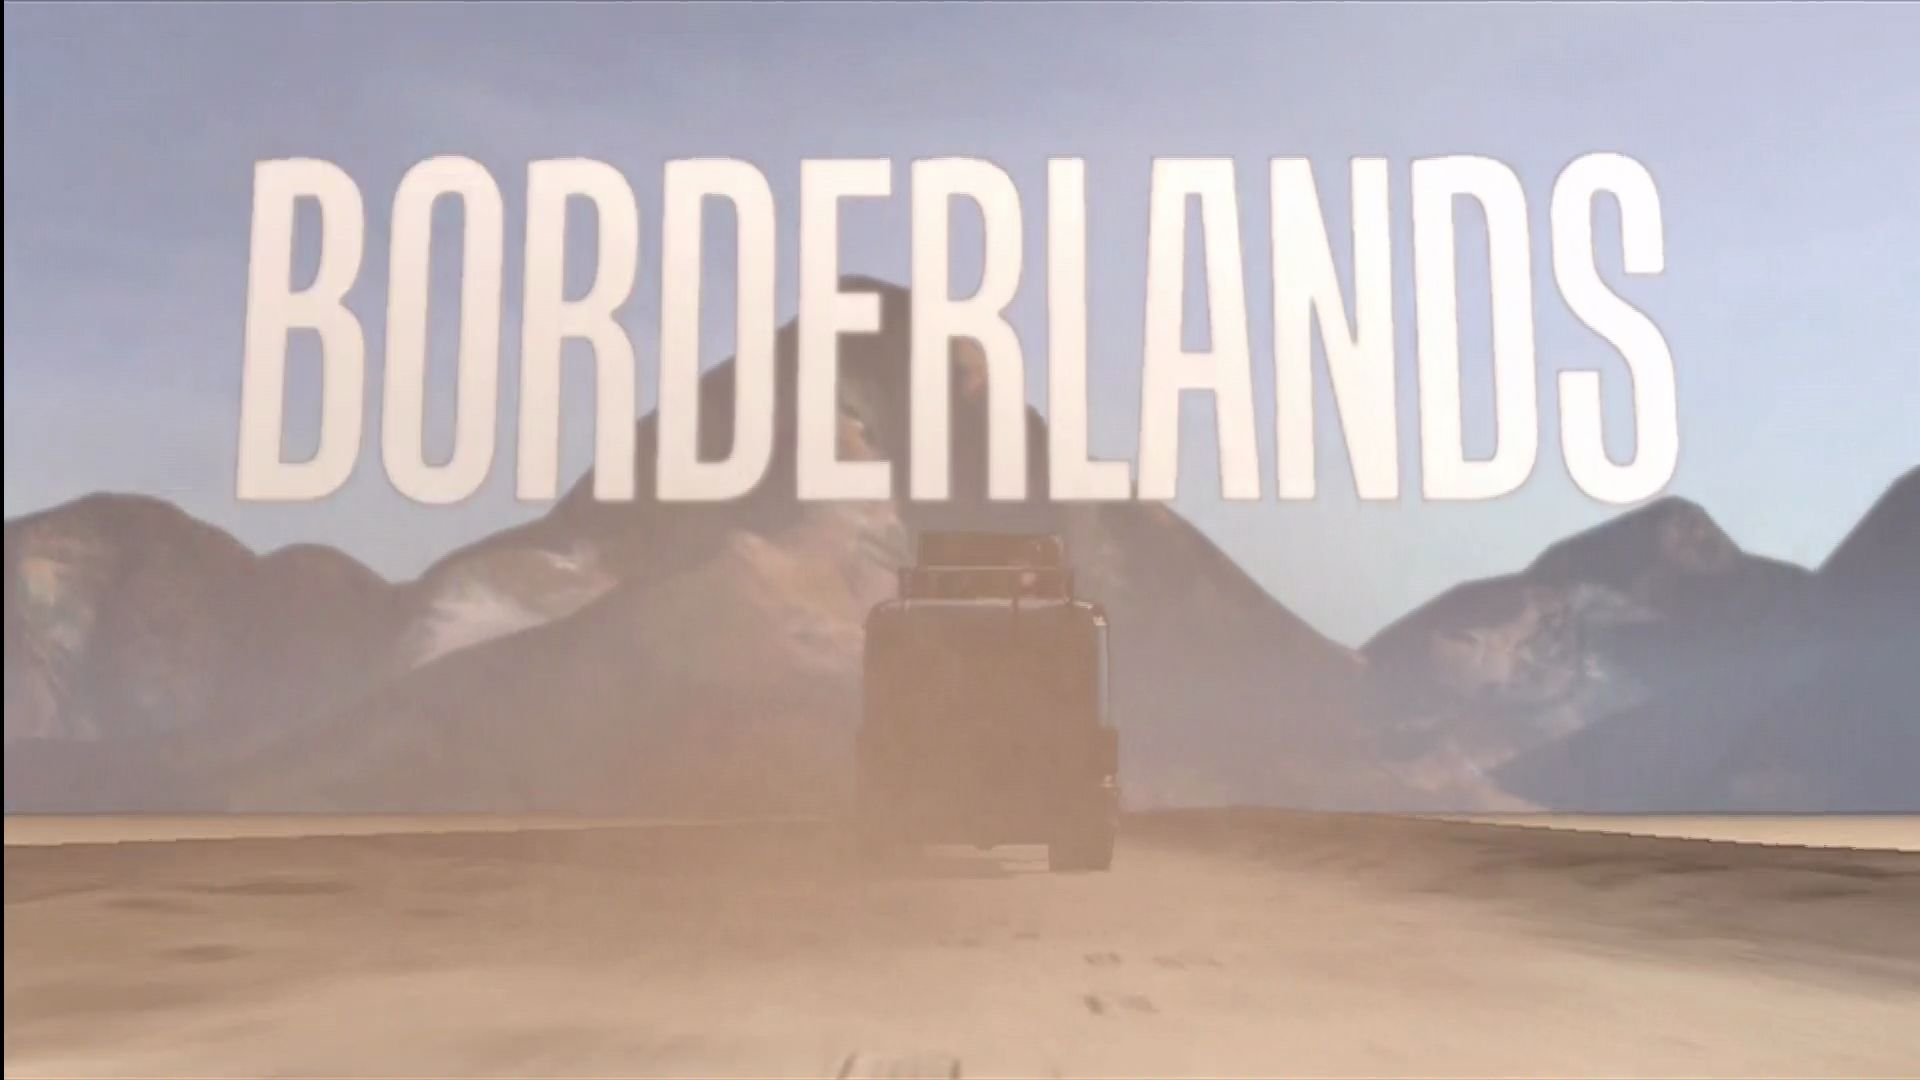 Borderlands - Xbox 360 Game